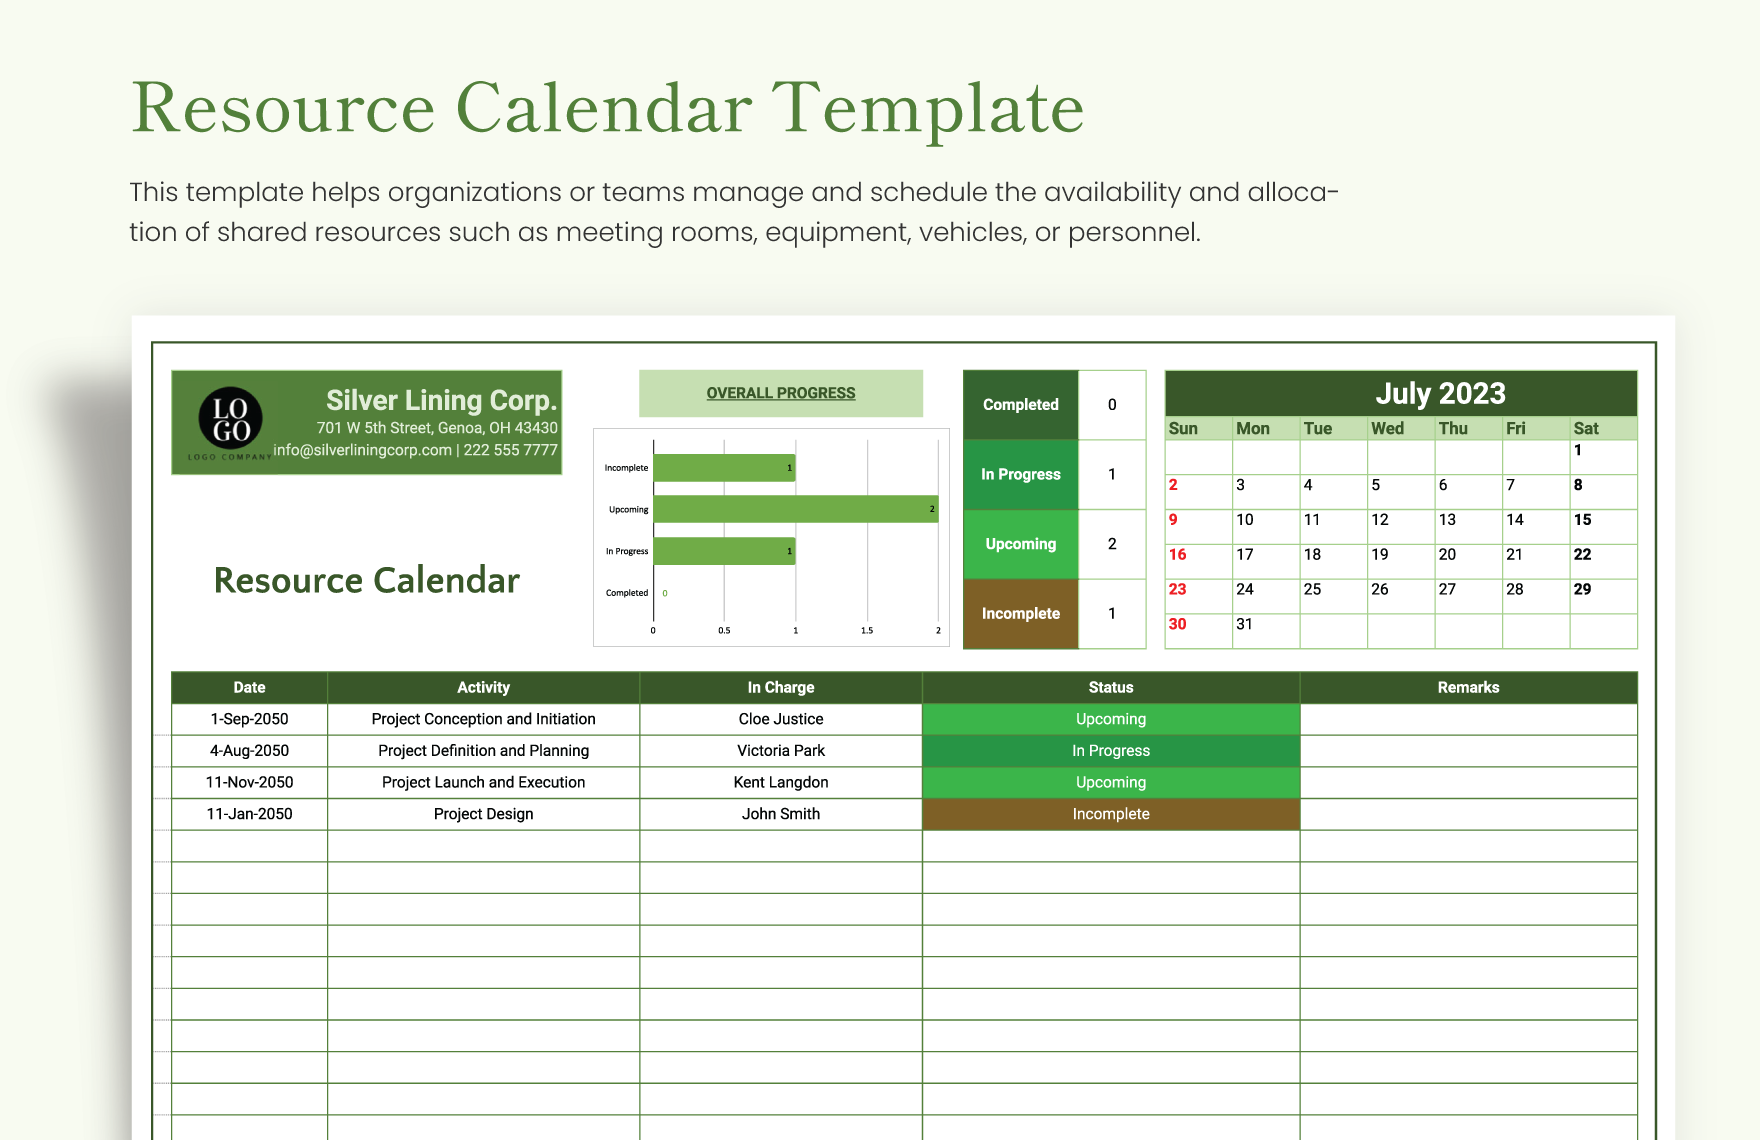 Resource Calendar Template